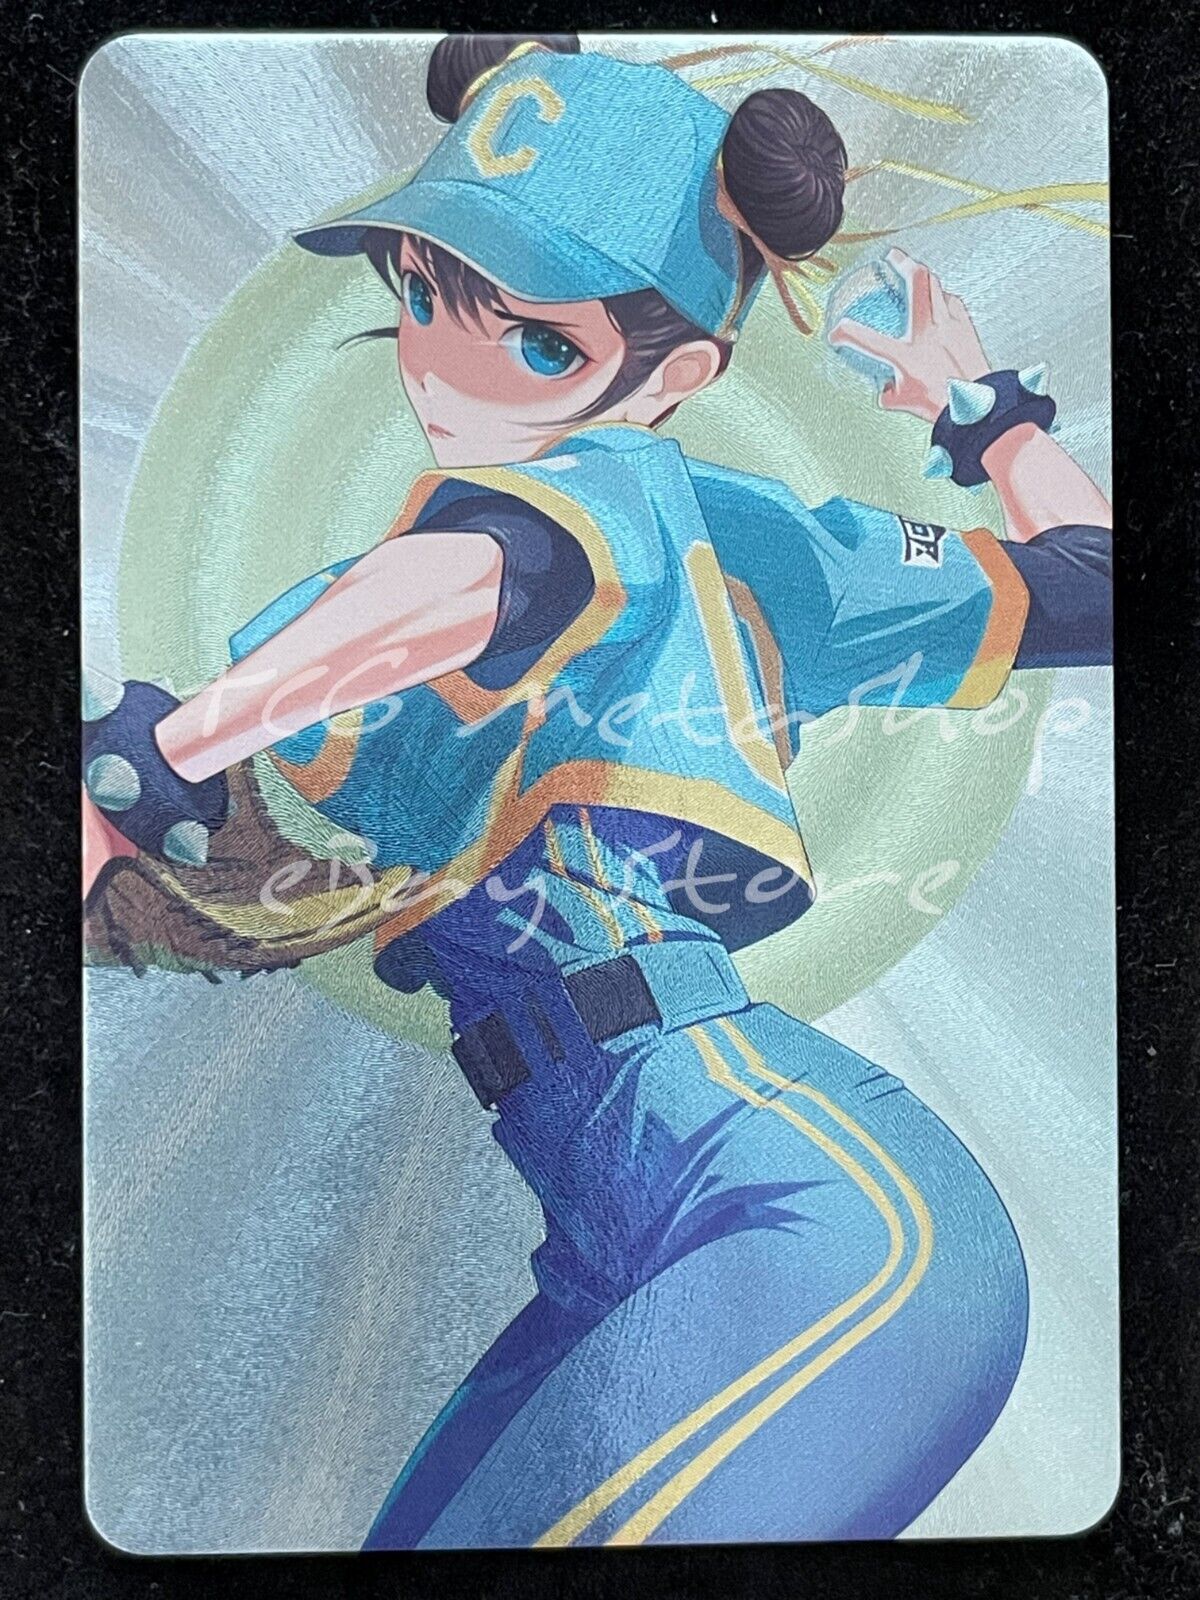 🔥 Chun-Li Street Fighter Goddess Story Anime Waifu Card ACG DUAL 435 🔥